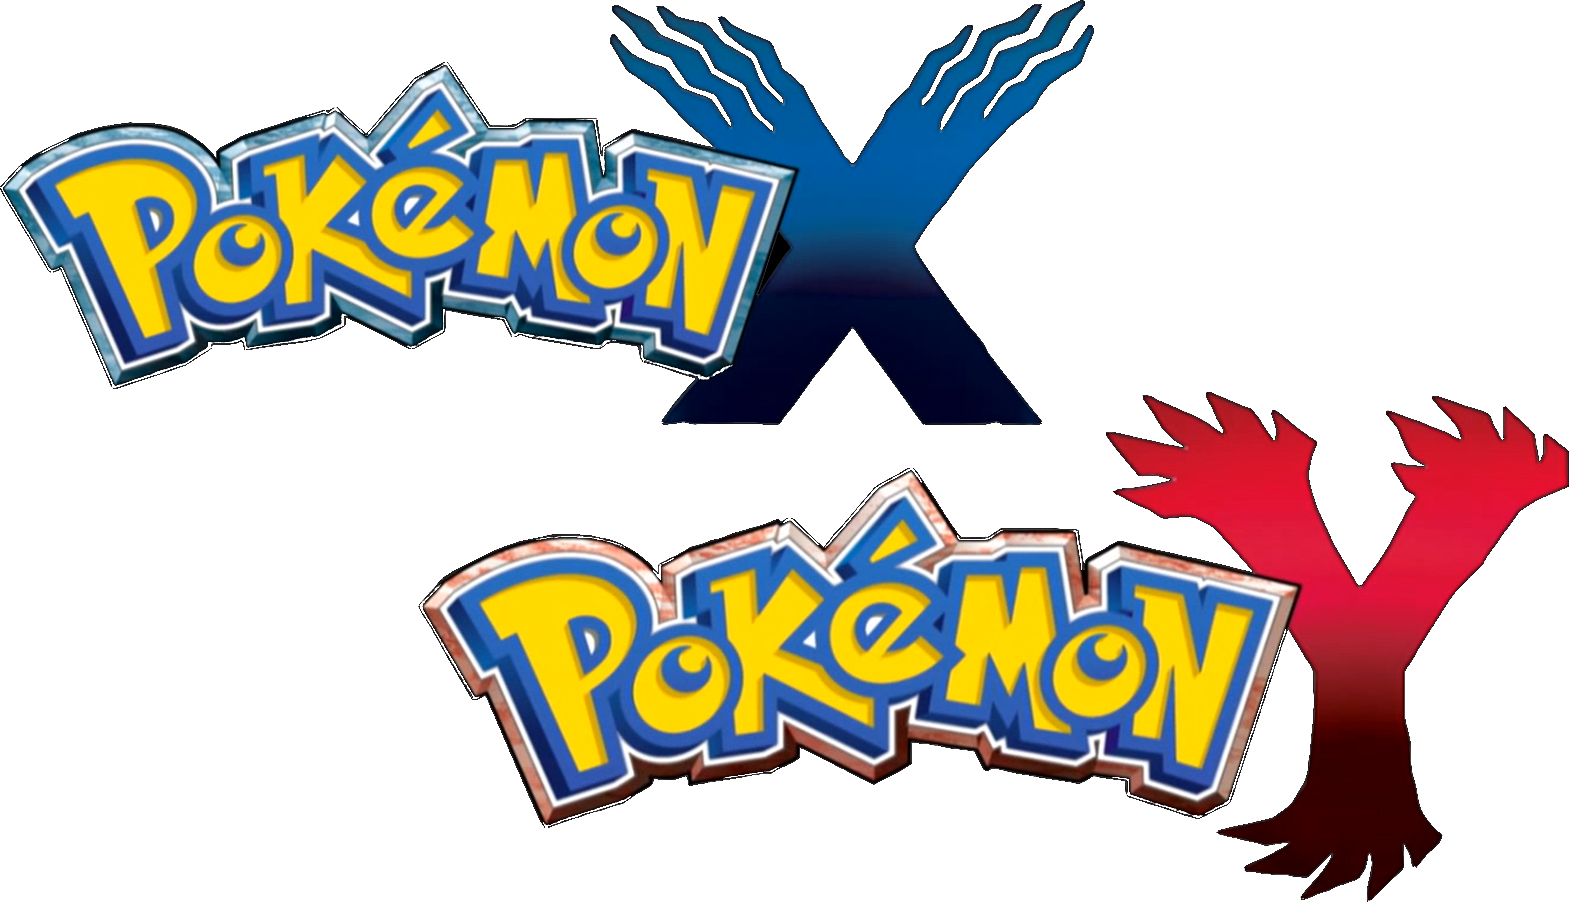 Sixth Pokémon generation, Nintendo